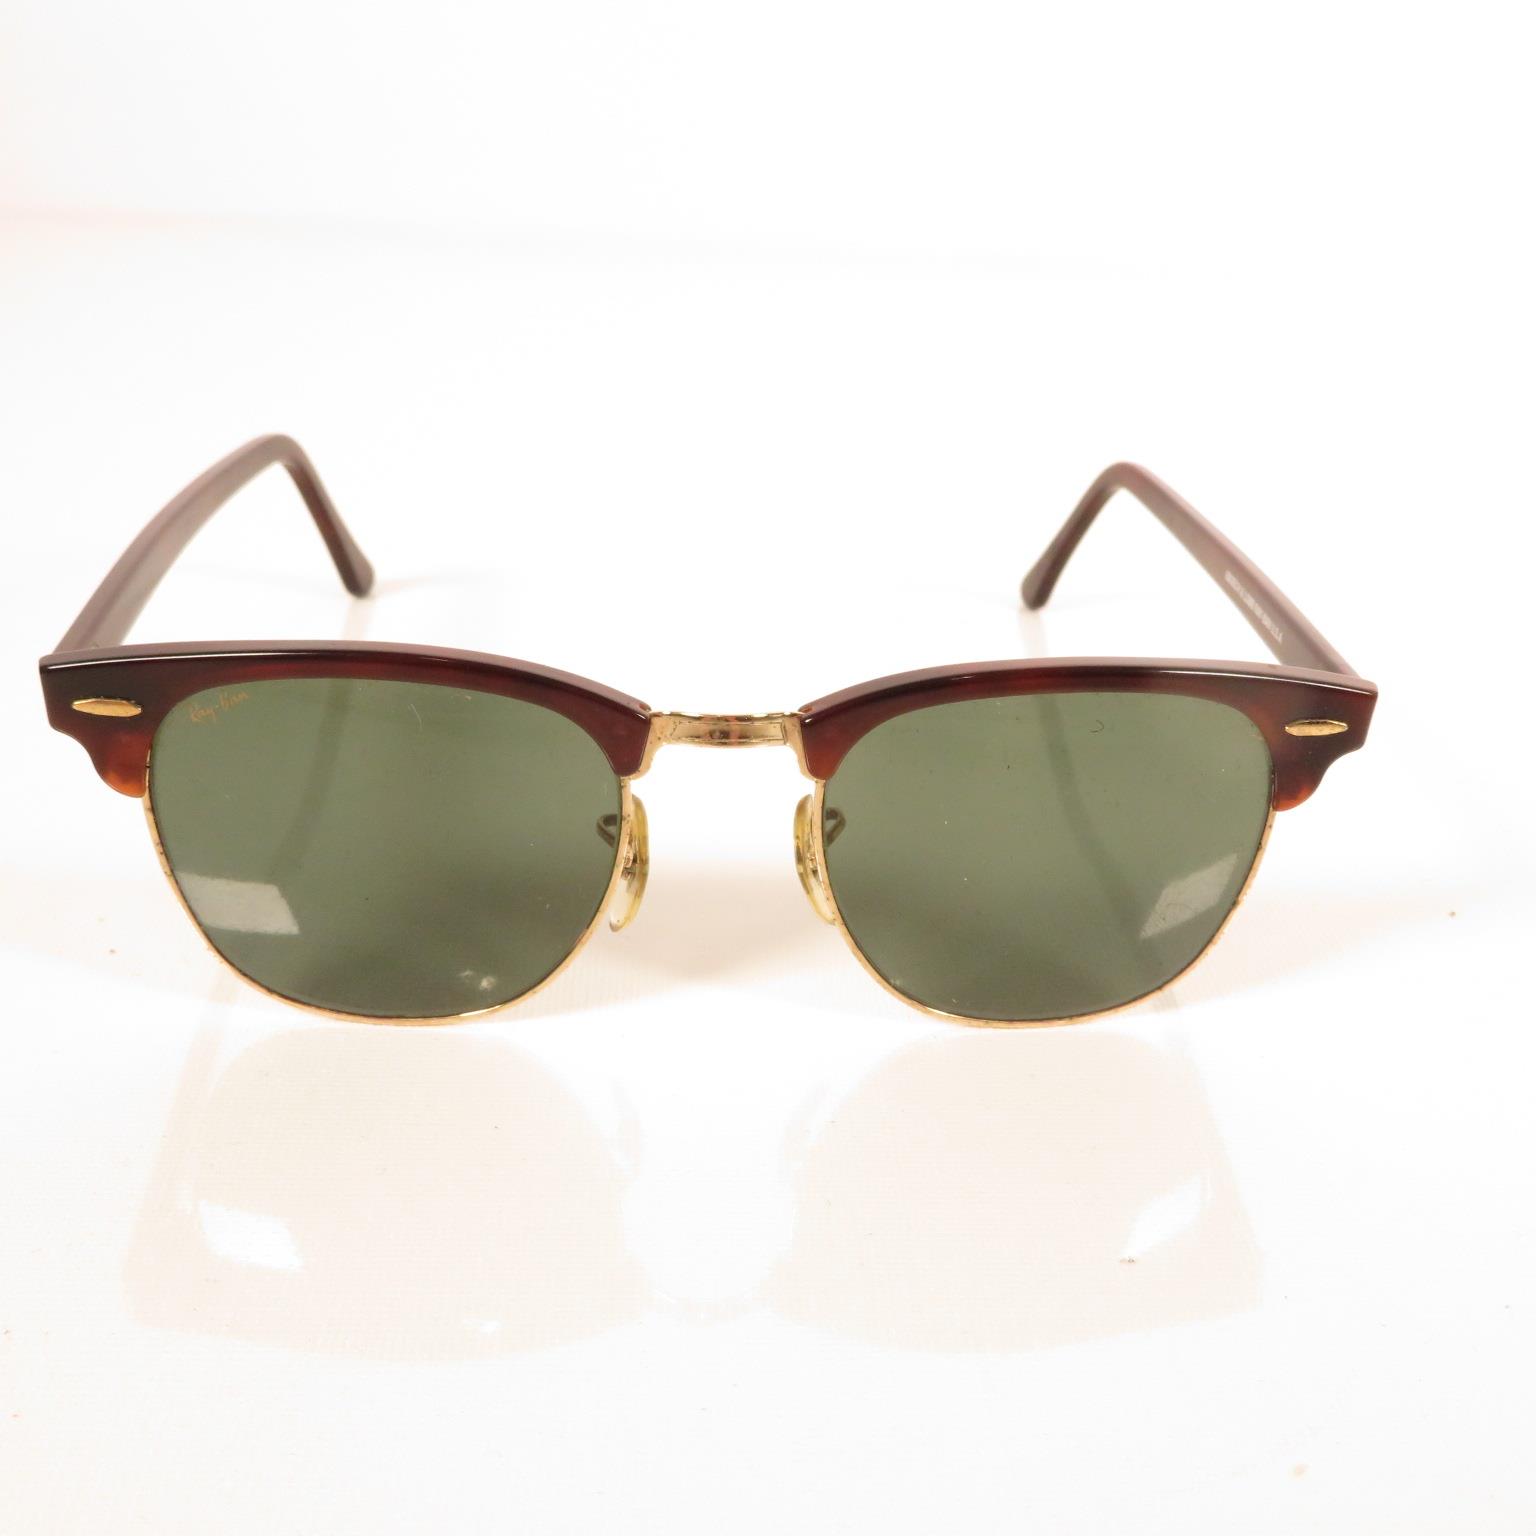 5x pairs Ray Ban sunglasses - - Image 11 of 23